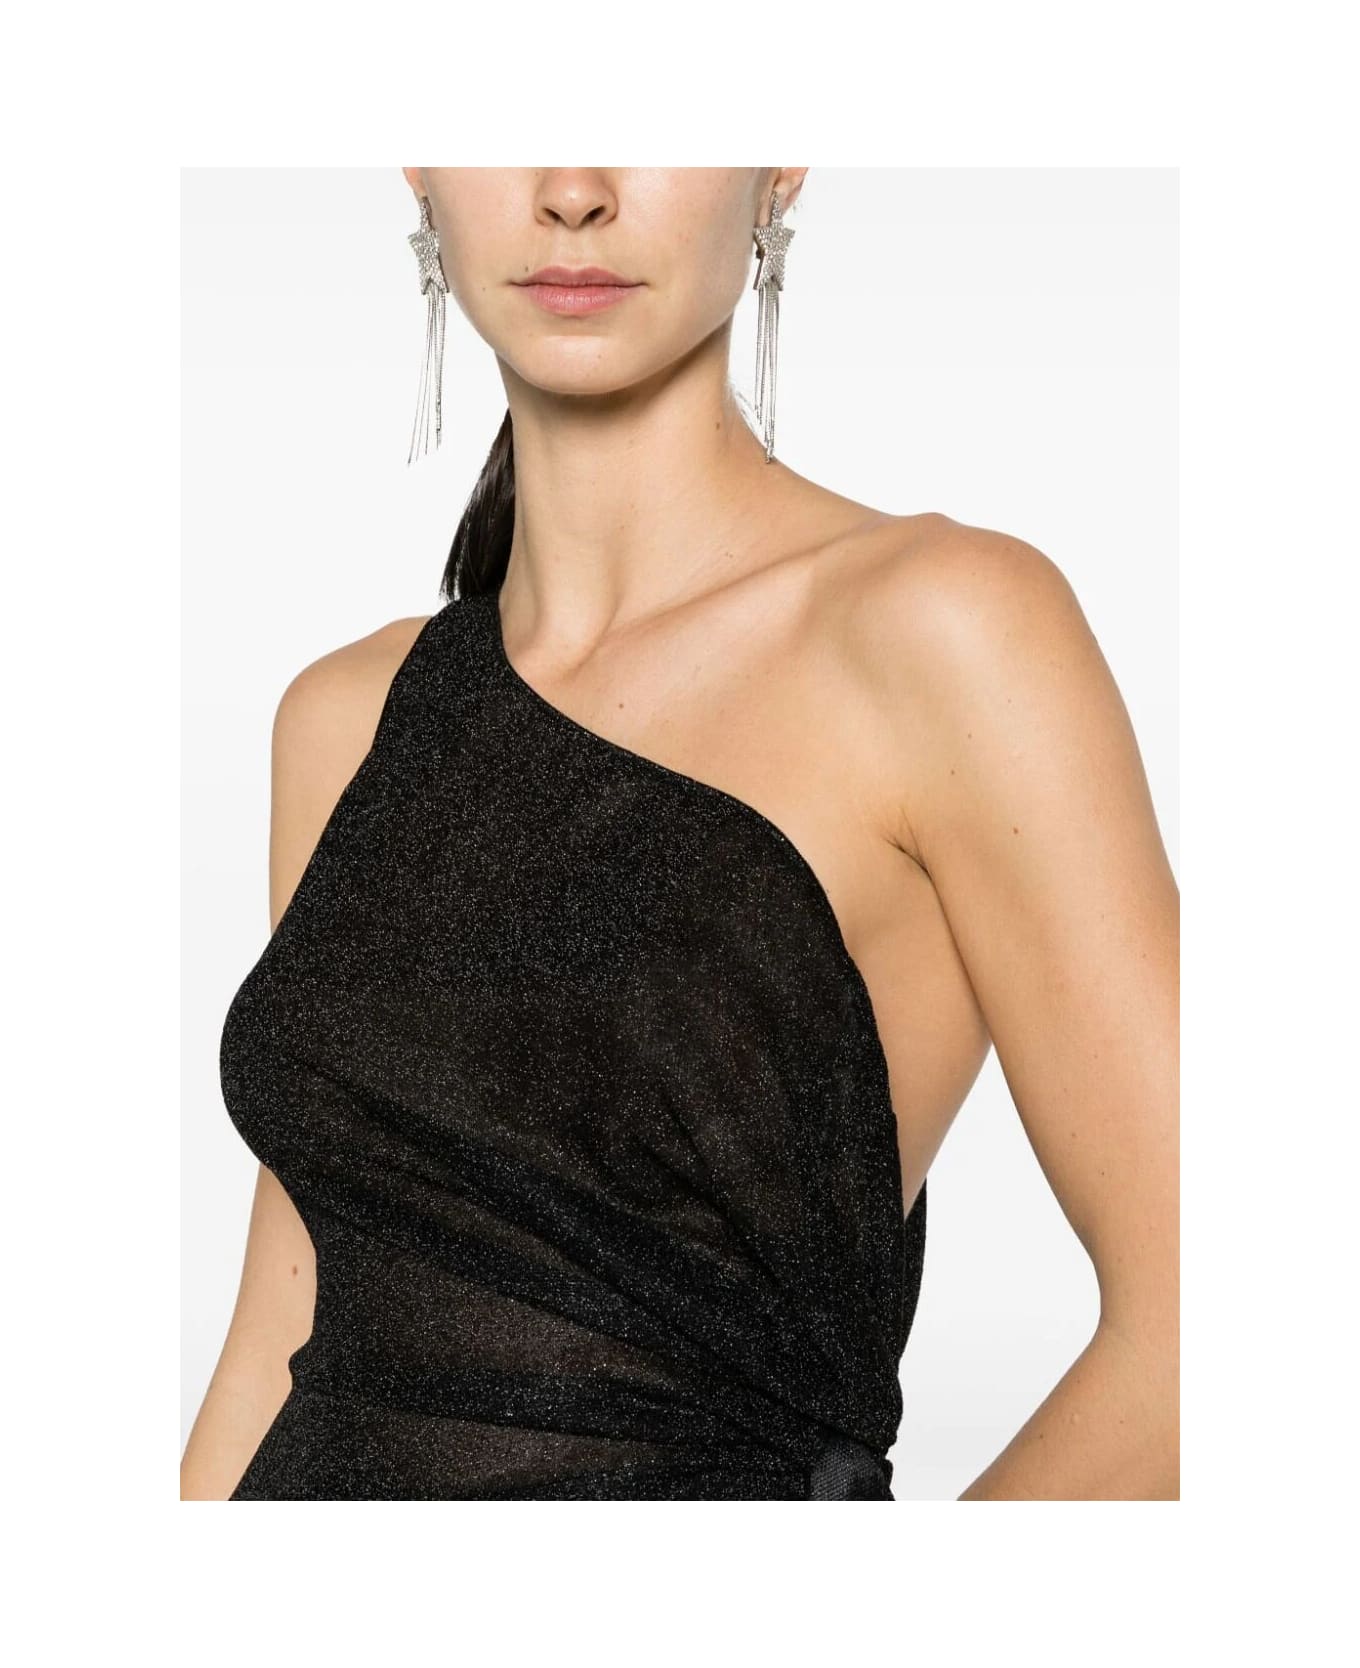 Oseree Long Dress Lumiere - Black